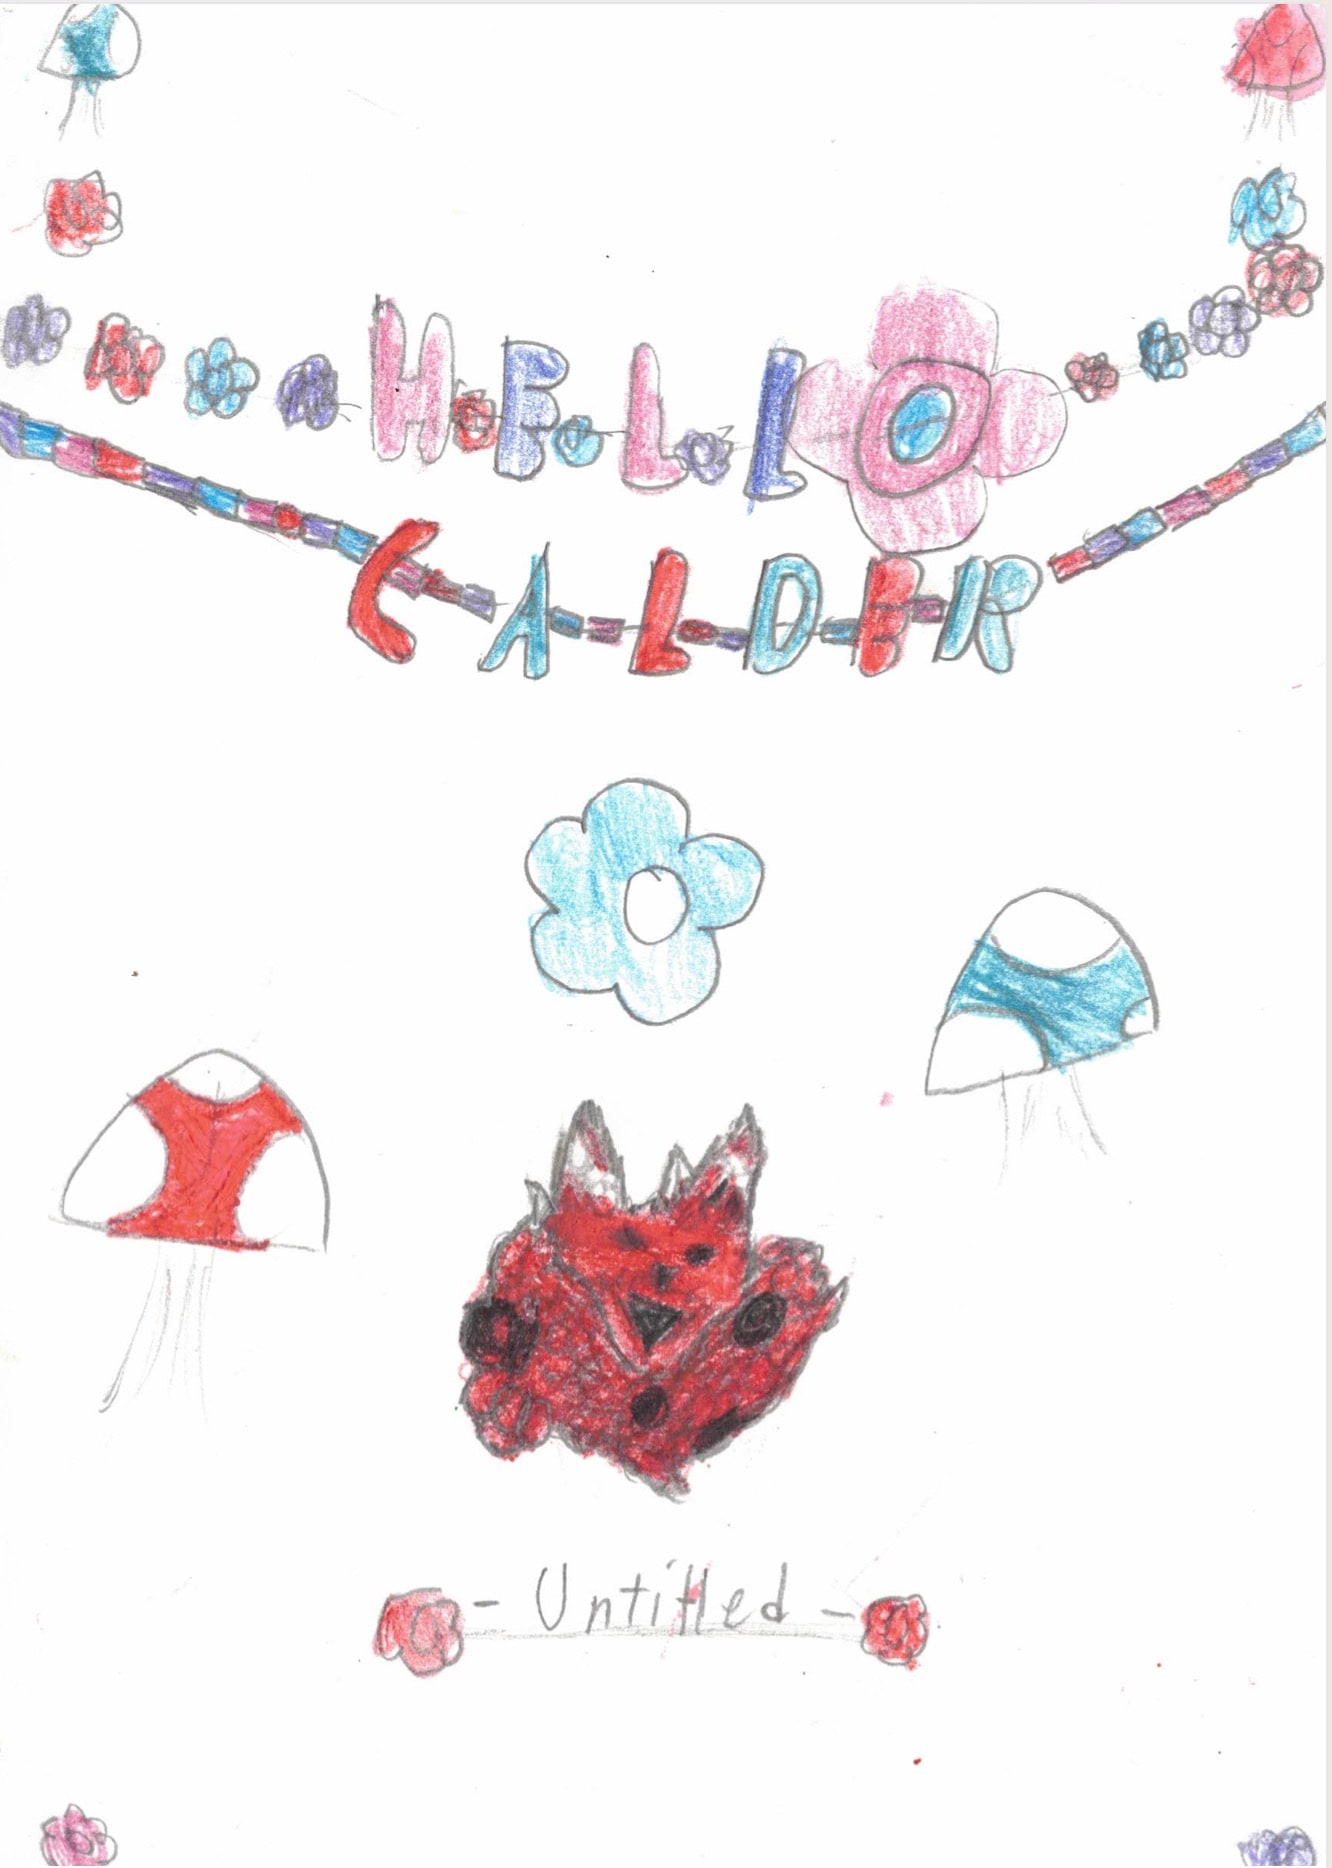 Rosewood+Calder "Hello Calder" bubble letter garland, flowers, and mushroom red-fox bust illustration